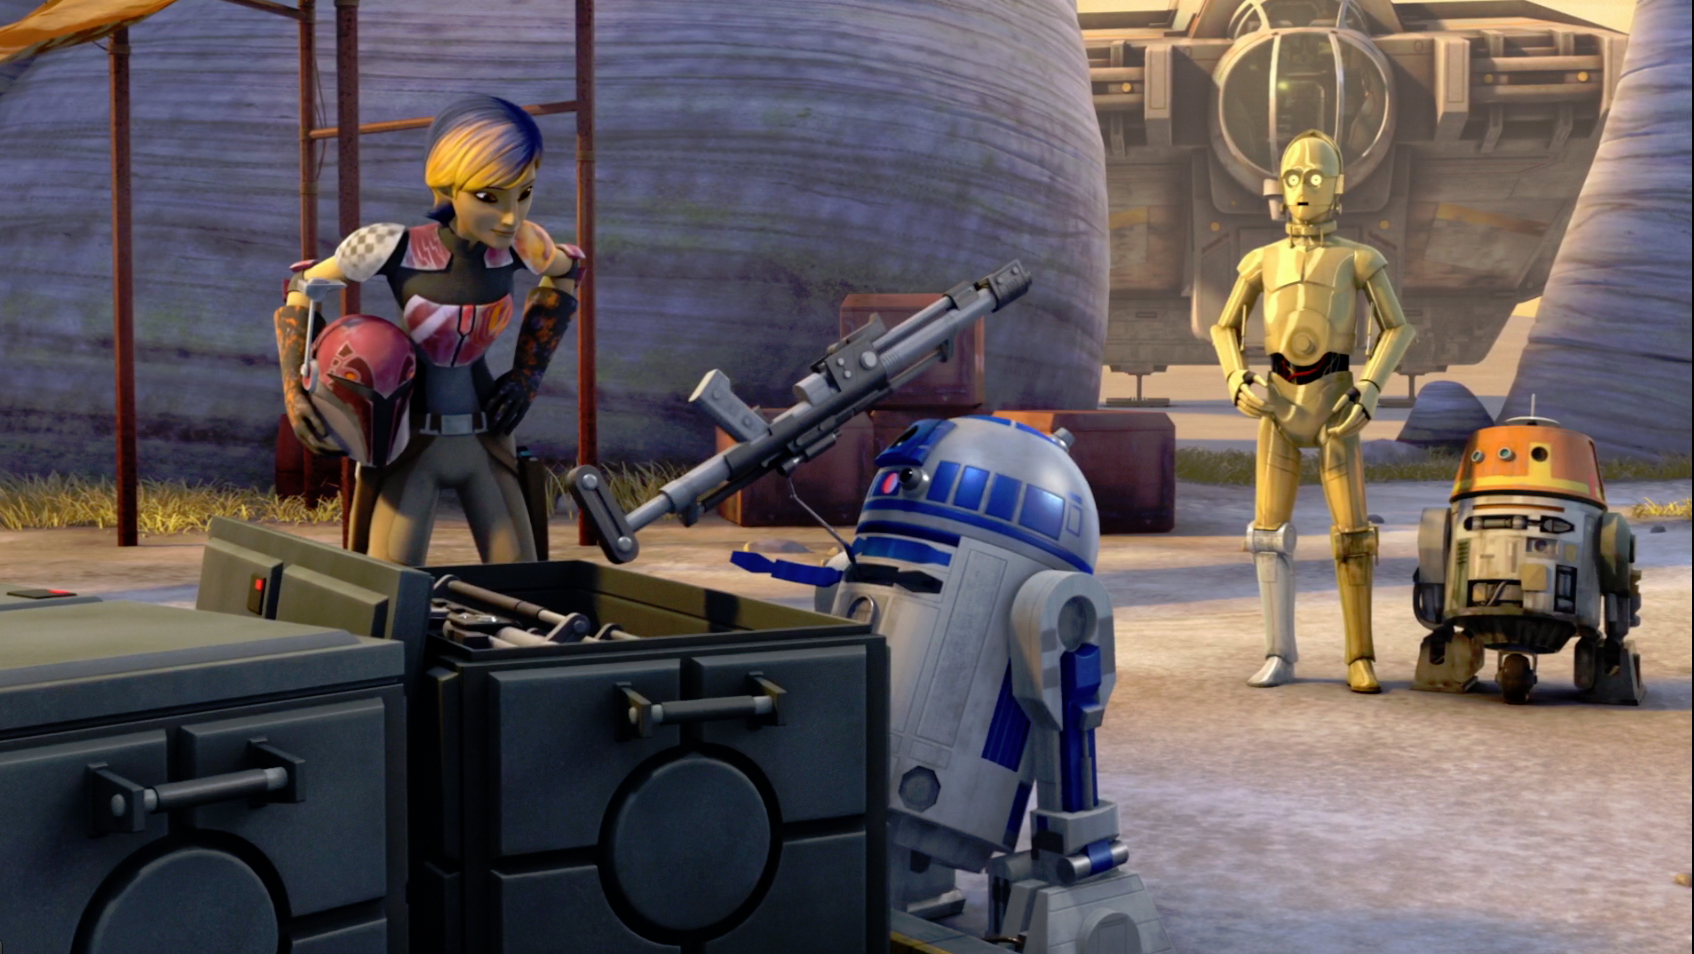 Star Wars Rebels: Droids in Distress